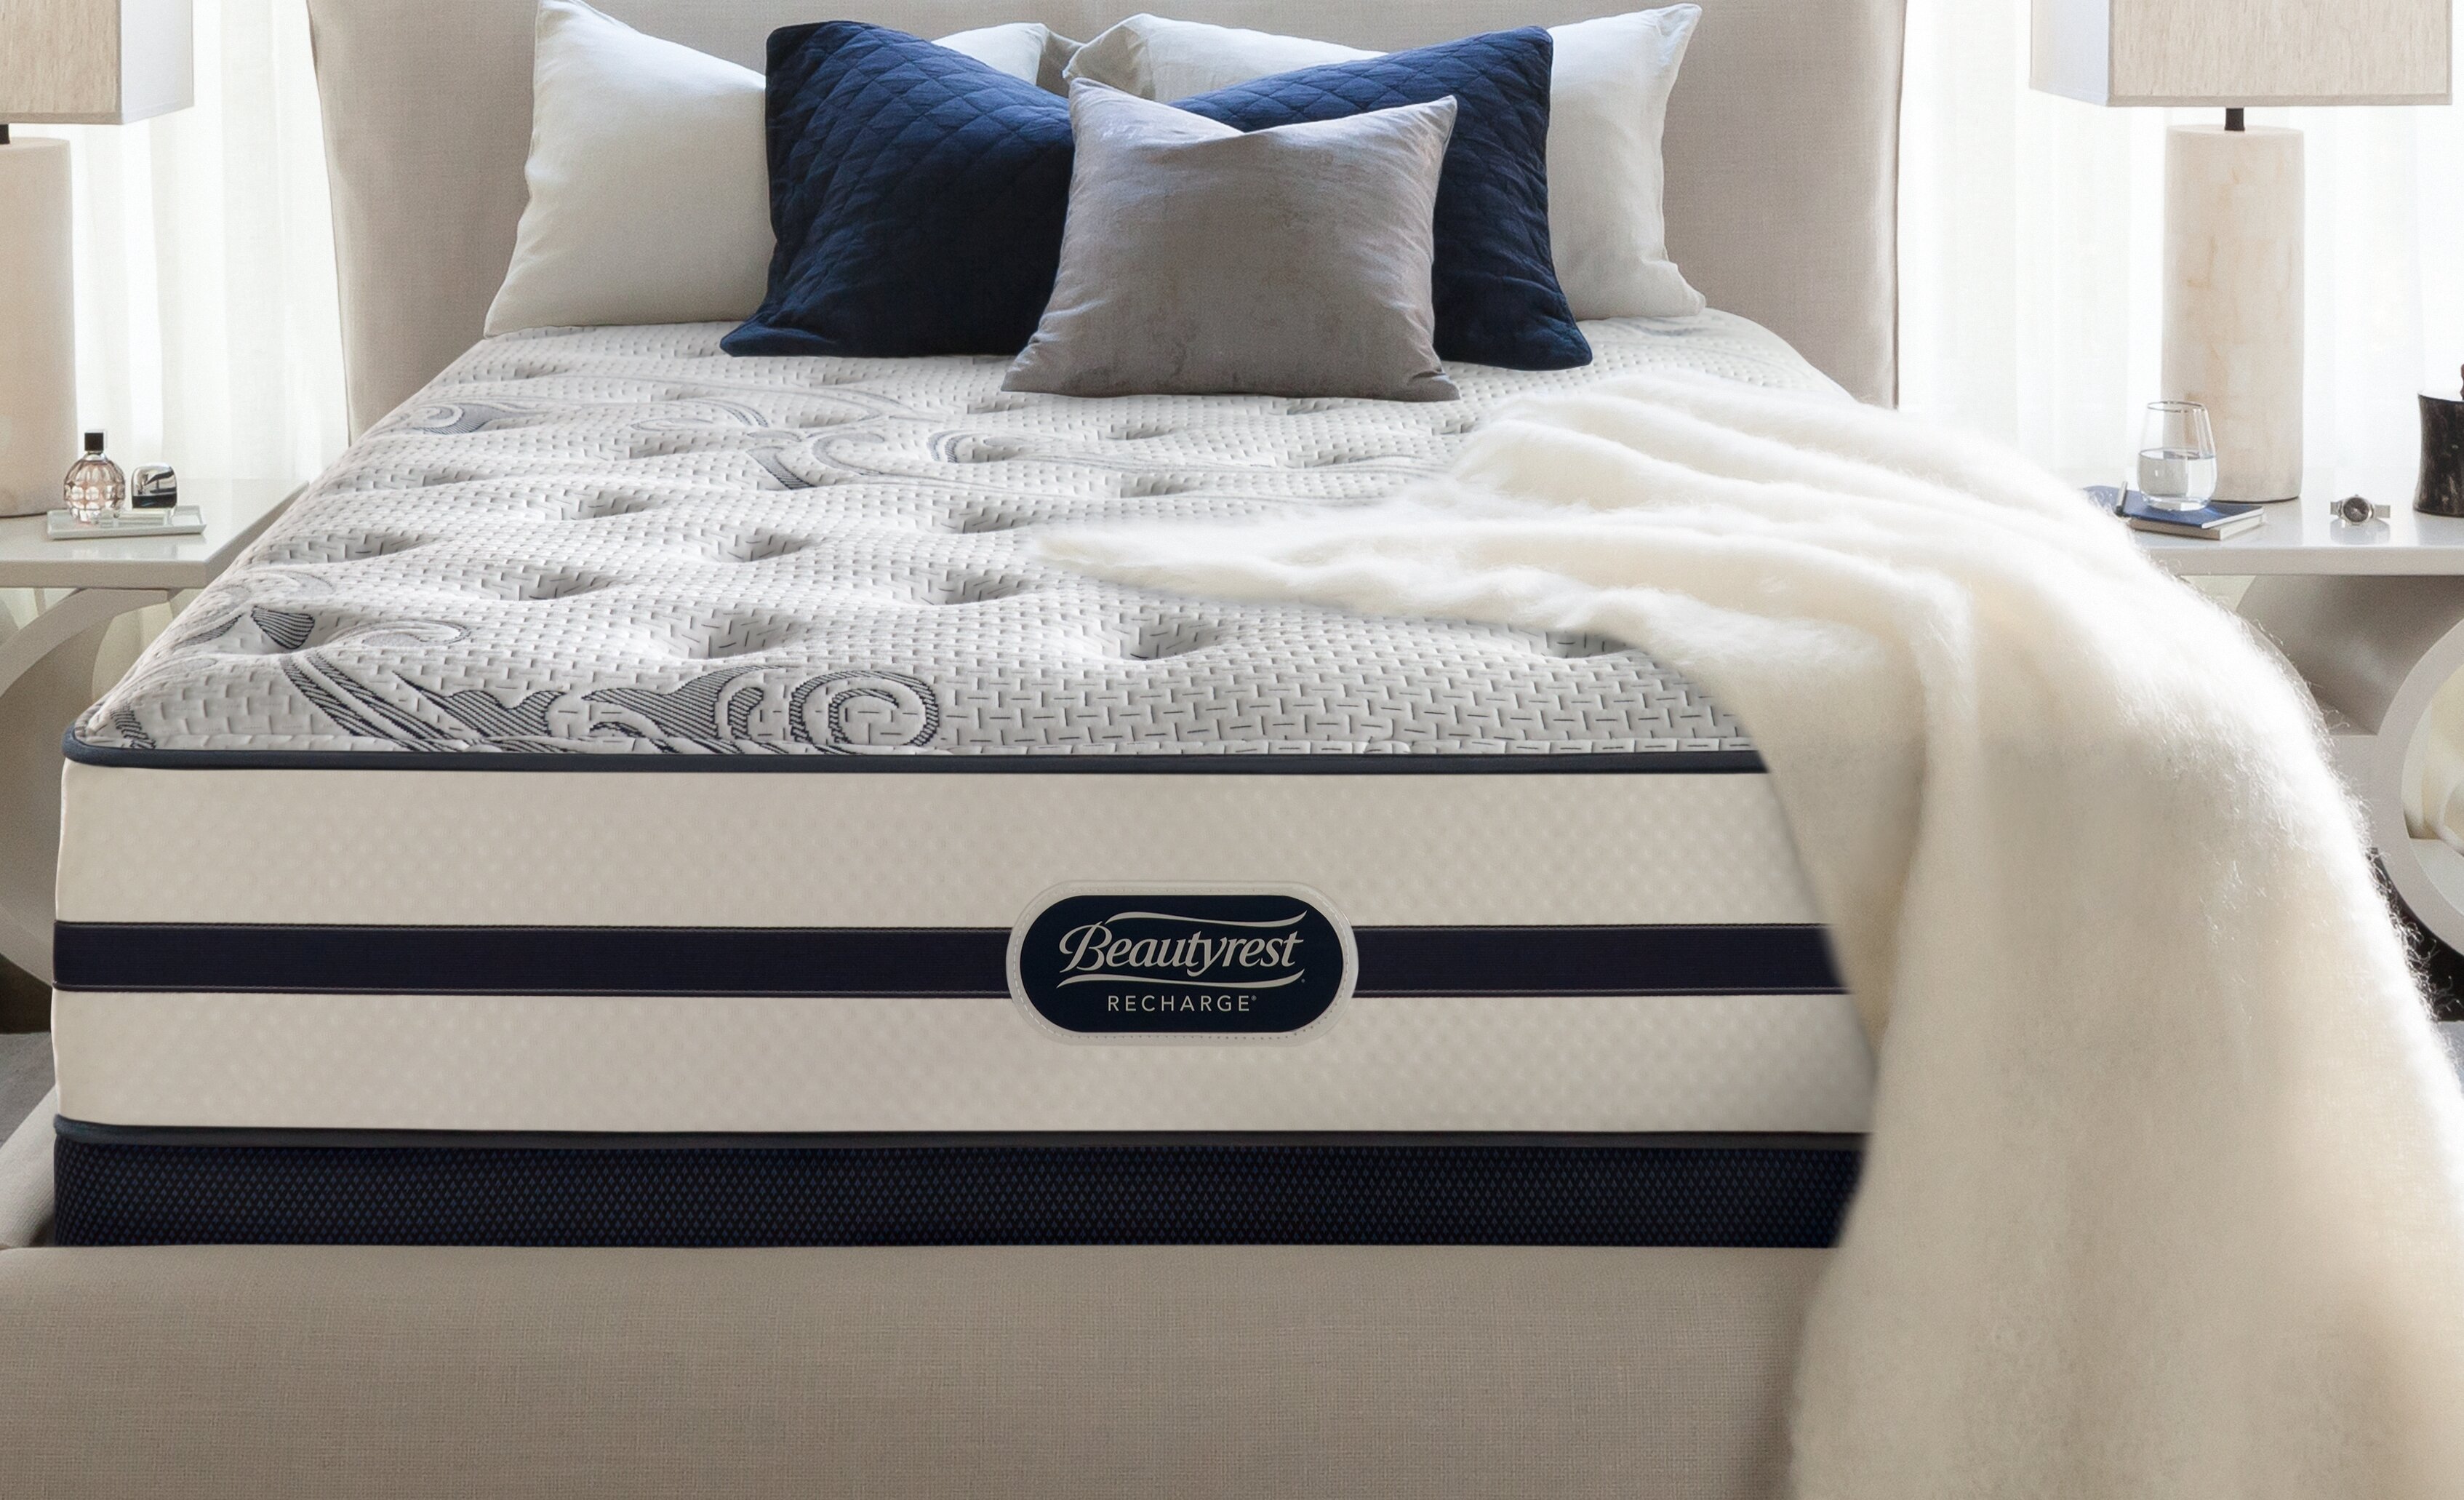 beautyrest recharge plus mattress reviews